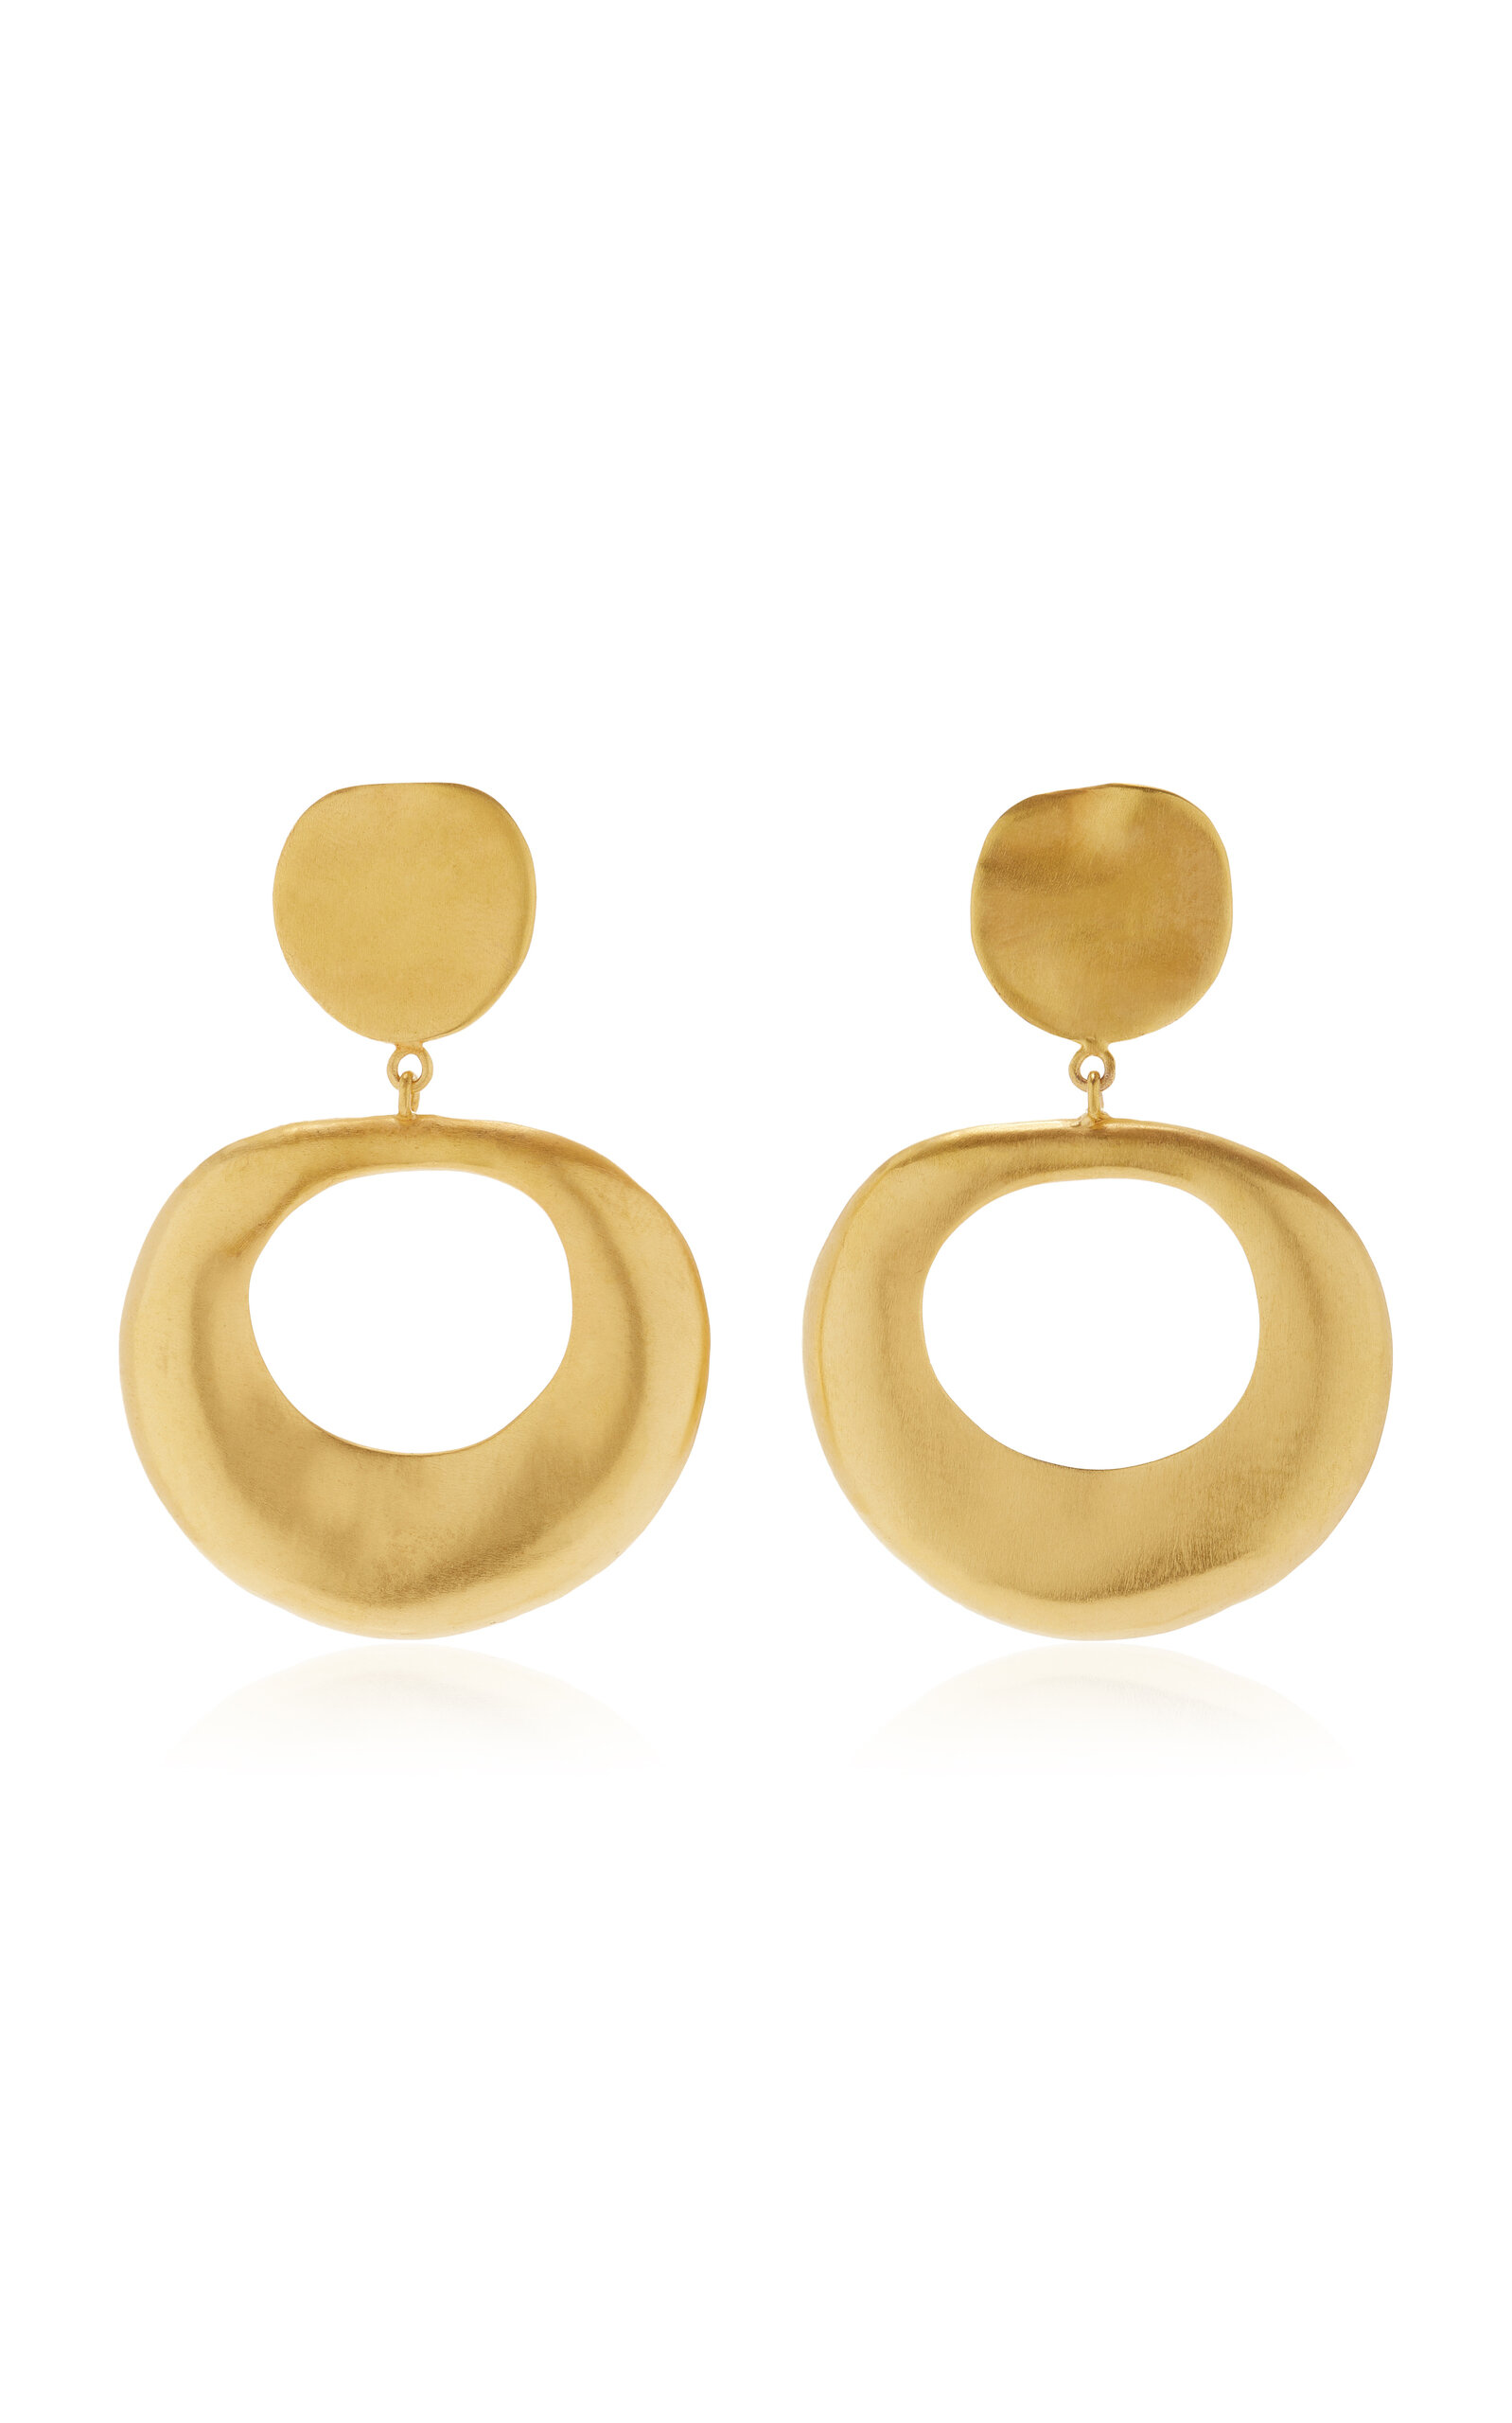 Andoke 24K Gold-Plated Earrings